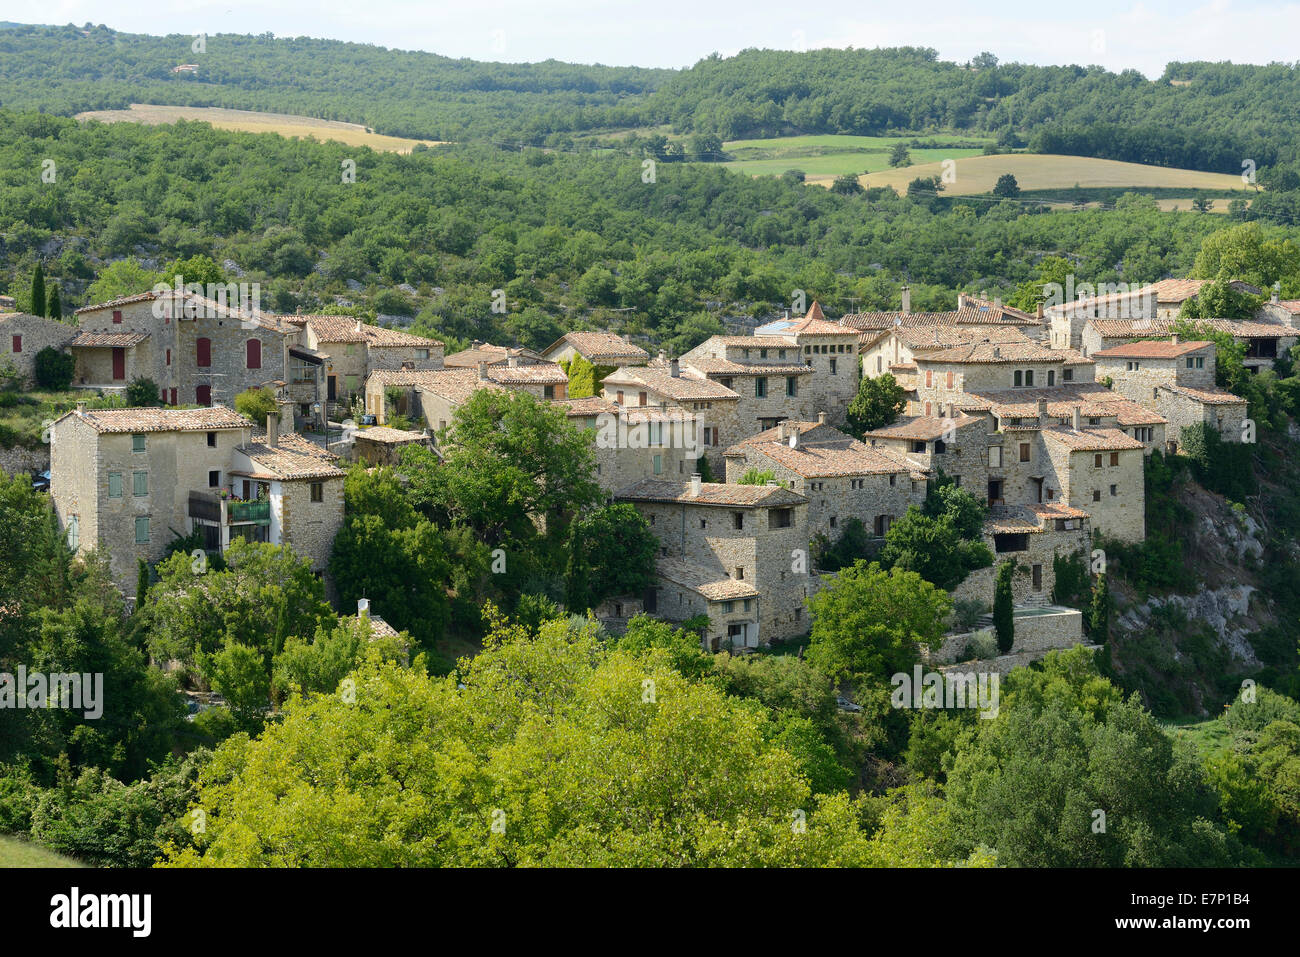 Europe, France, Provence, Alpes-de-Haute-Provence, department, Oppedette, village, town, homes Stock Photo